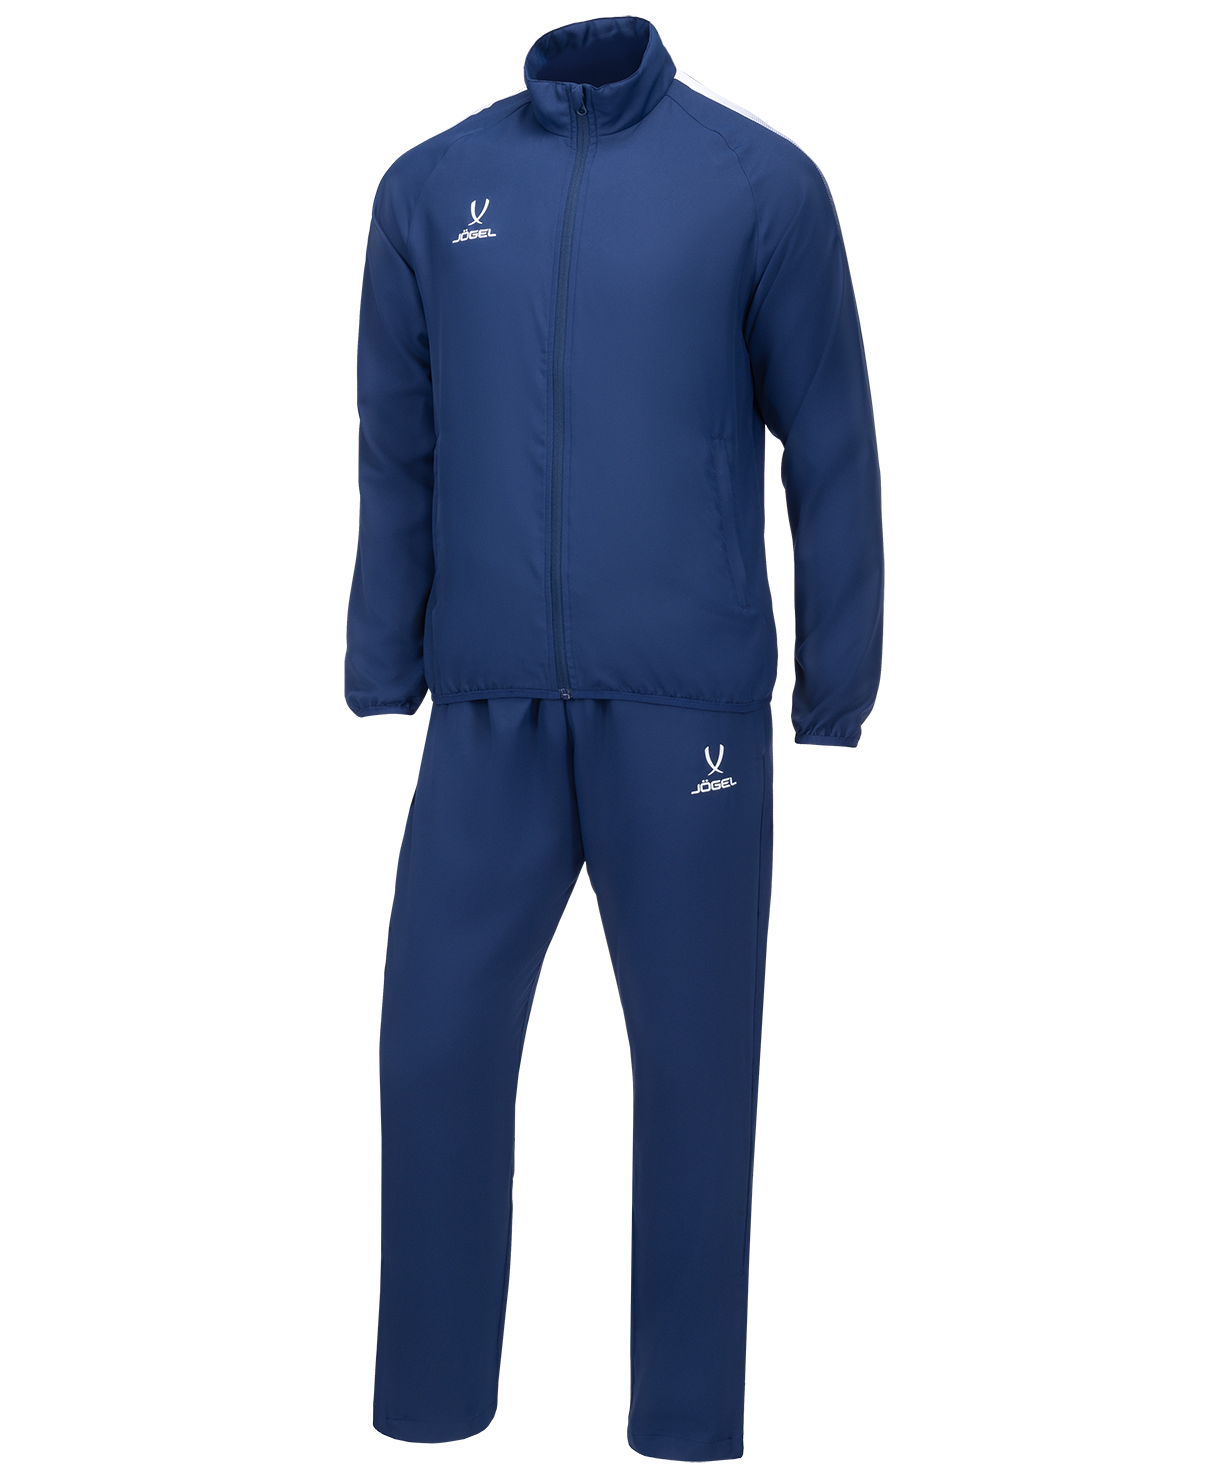 Костюм спортивный Jogel Camp Lined Suit, темно-синий/темно-синий, детский (YM) костюм спортивный jogel camp lined suit зеленый темно синий